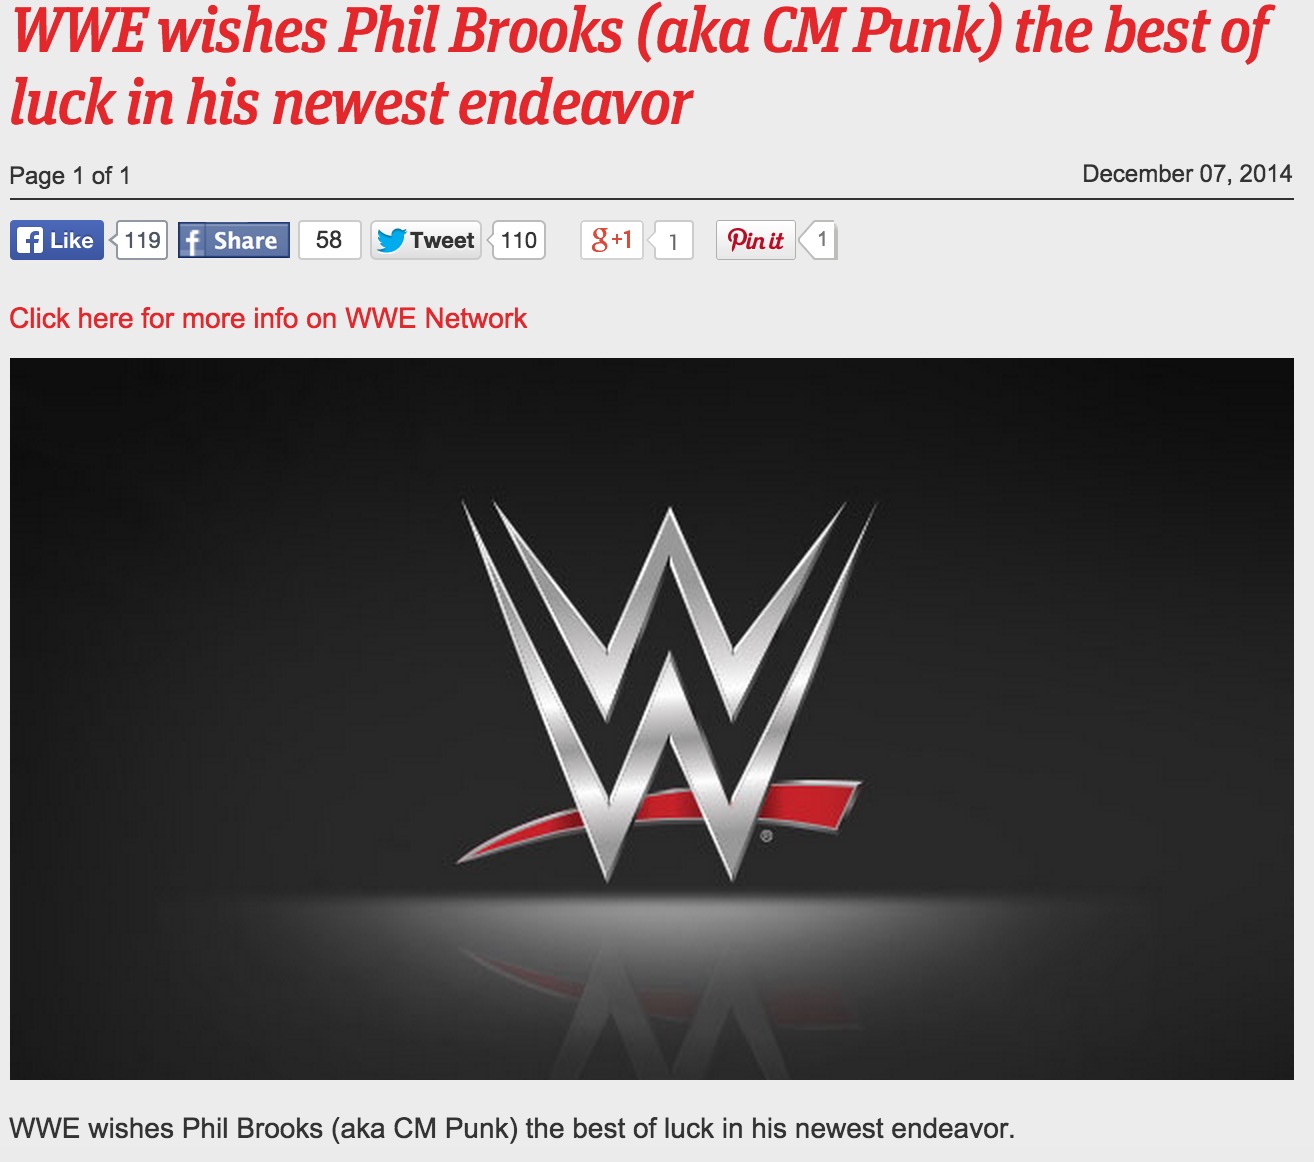 Phil Brooks CM Punk